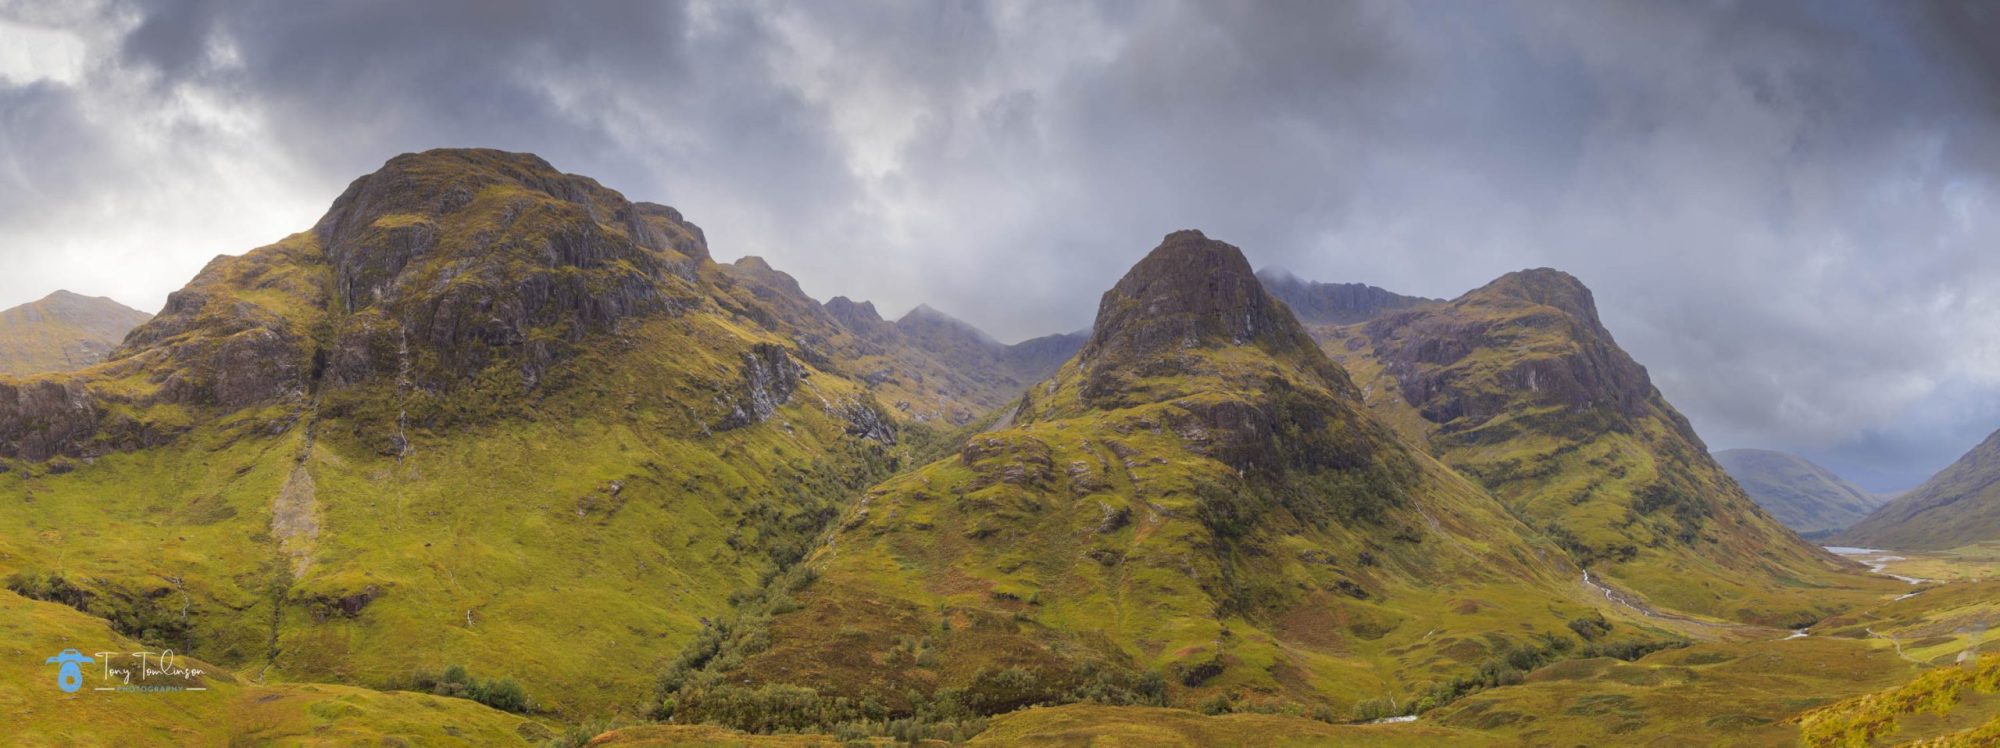 tony-tomlinson-photography-glencoe-scottish-highlands-the-three-sisters-mountains-landscape-2000x748